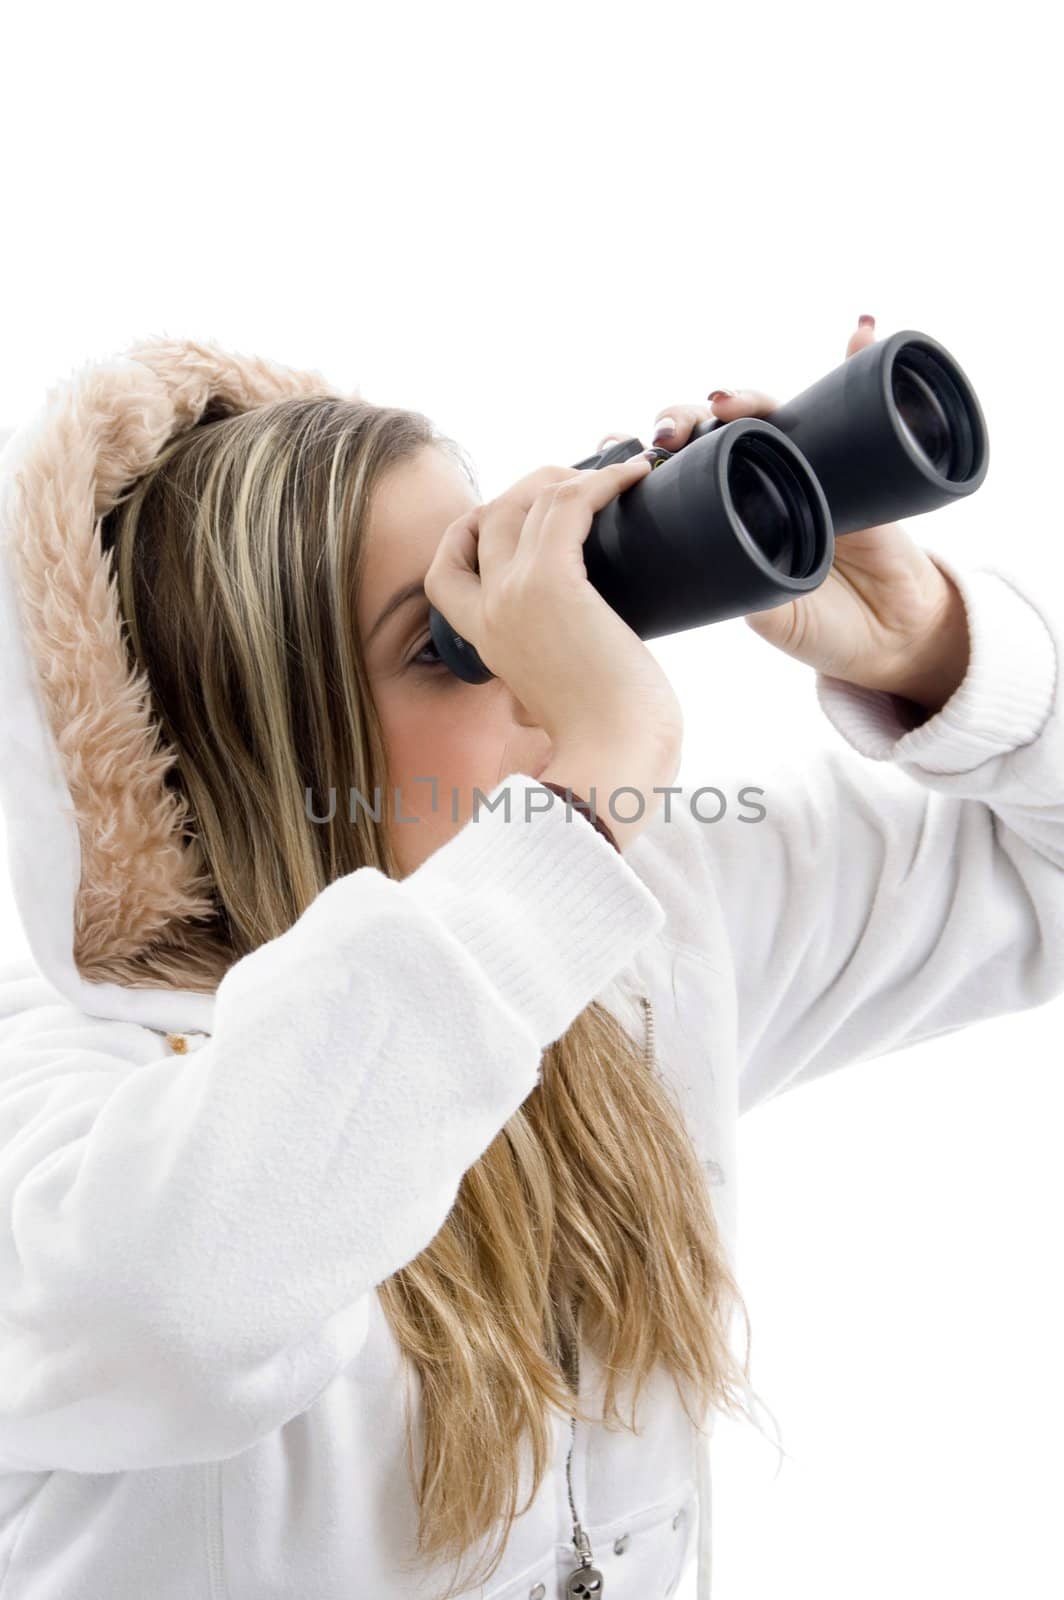 professional photographer eyeing with binoculars by imagerymajestic